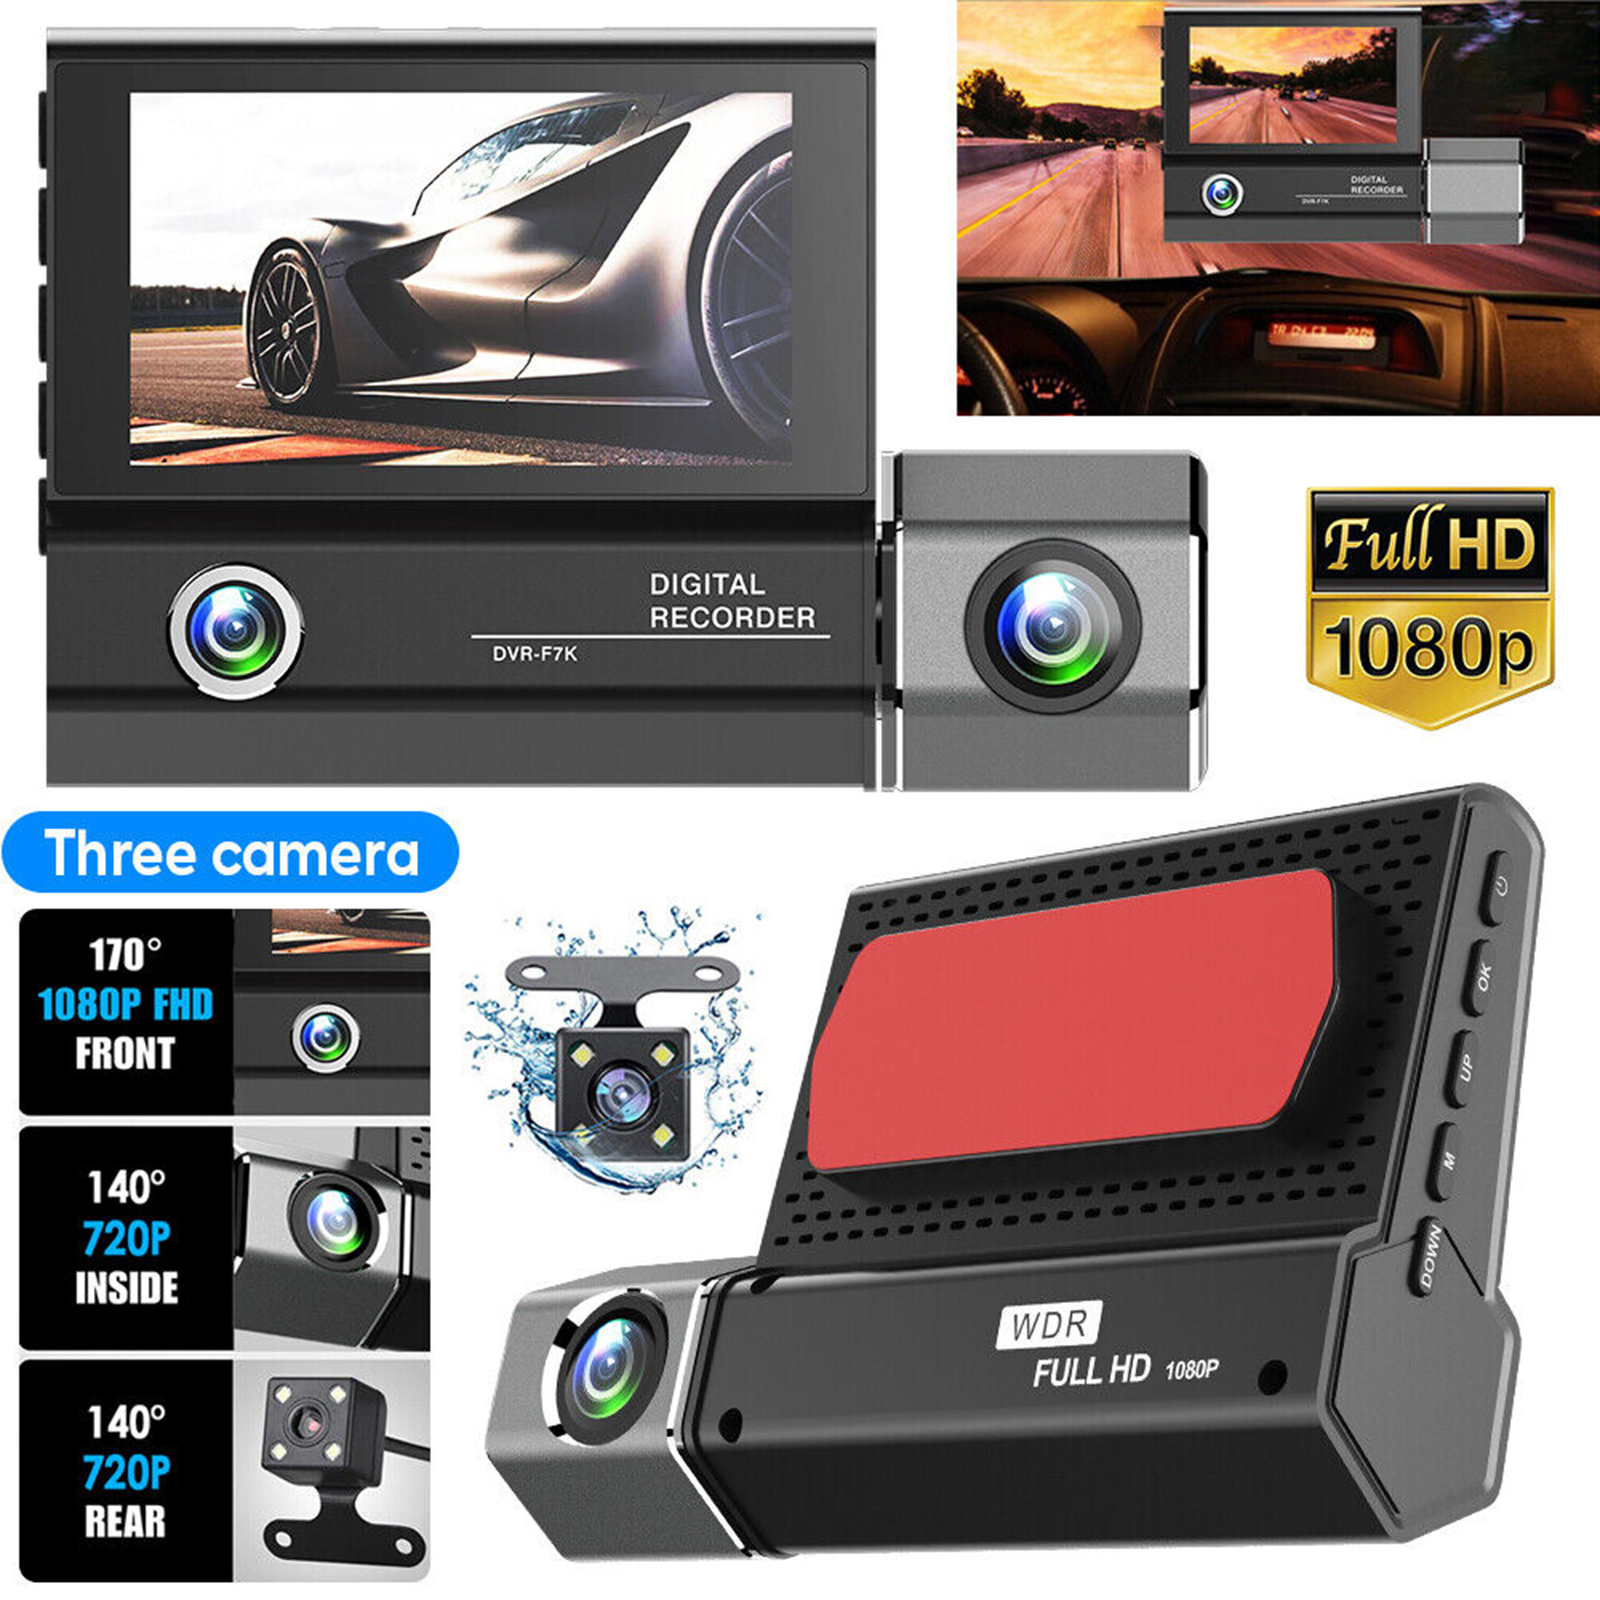 1080P 3 Lens Dash Cam Car Dvr 3.0 Inch HD Ips Screen Wide Angle Rearview Video Recorder Camera G-Sensor